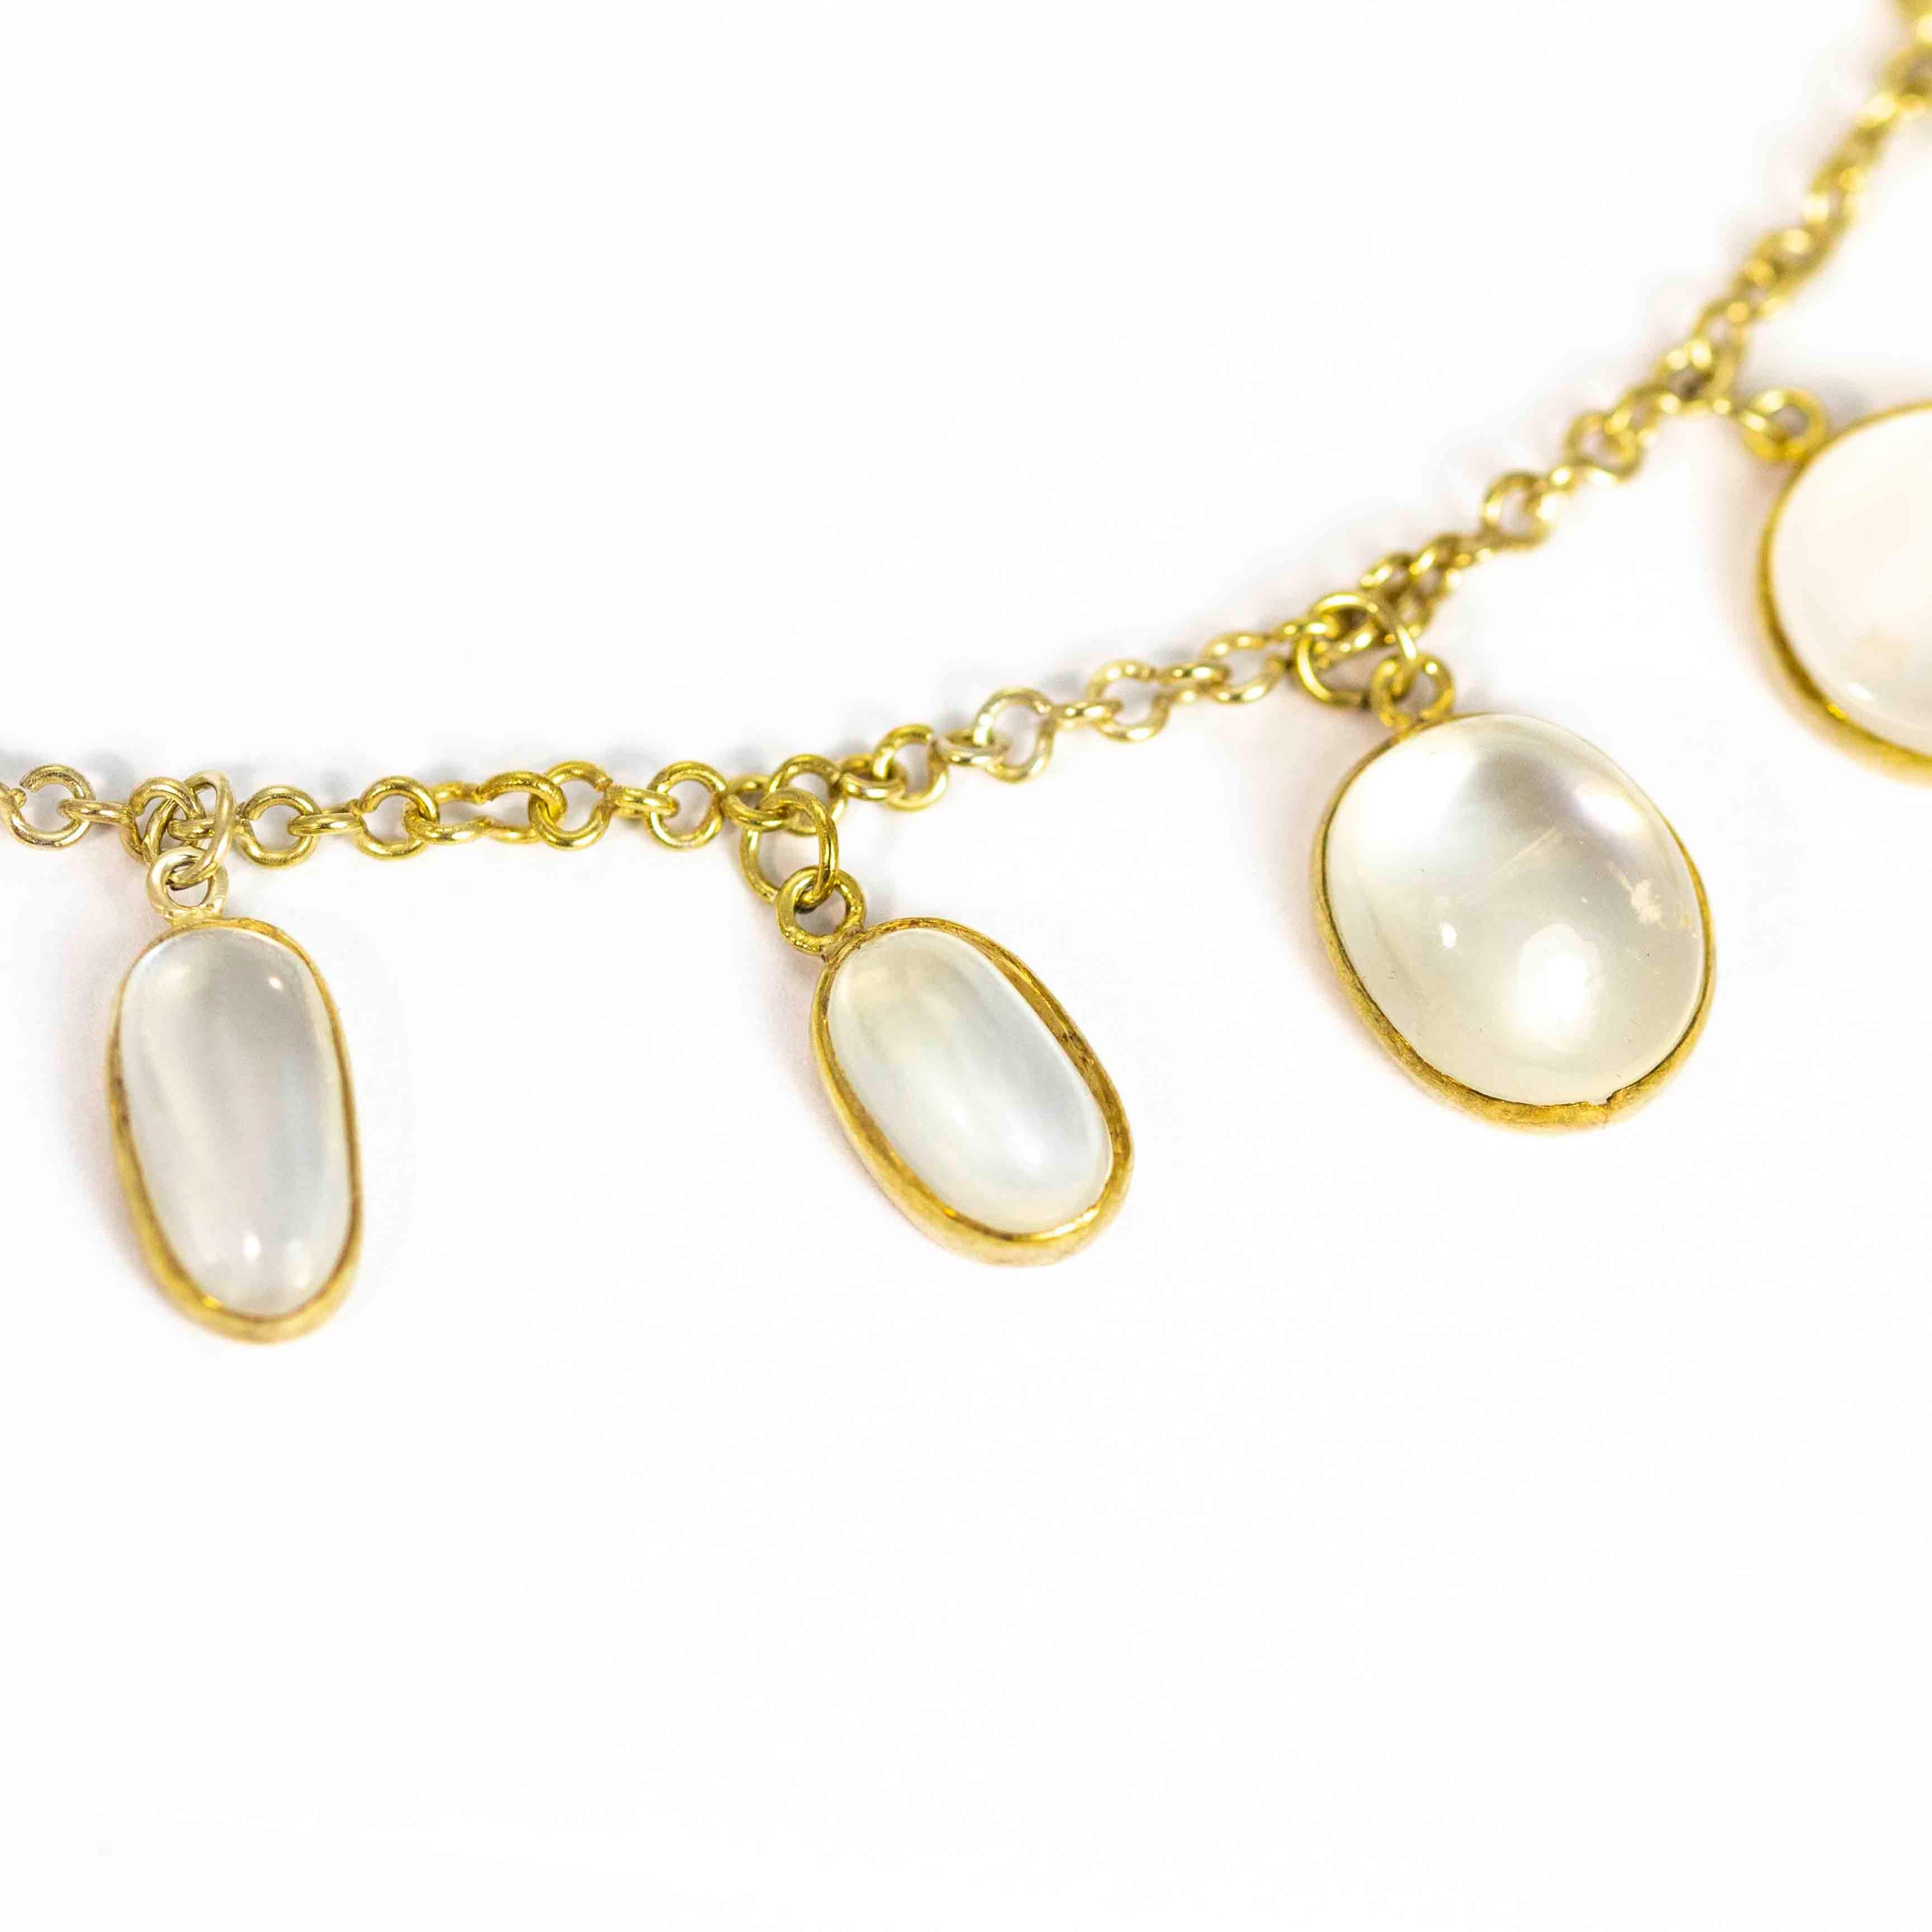 Women's or Men's Vintage Gilded Moonstone Necklace